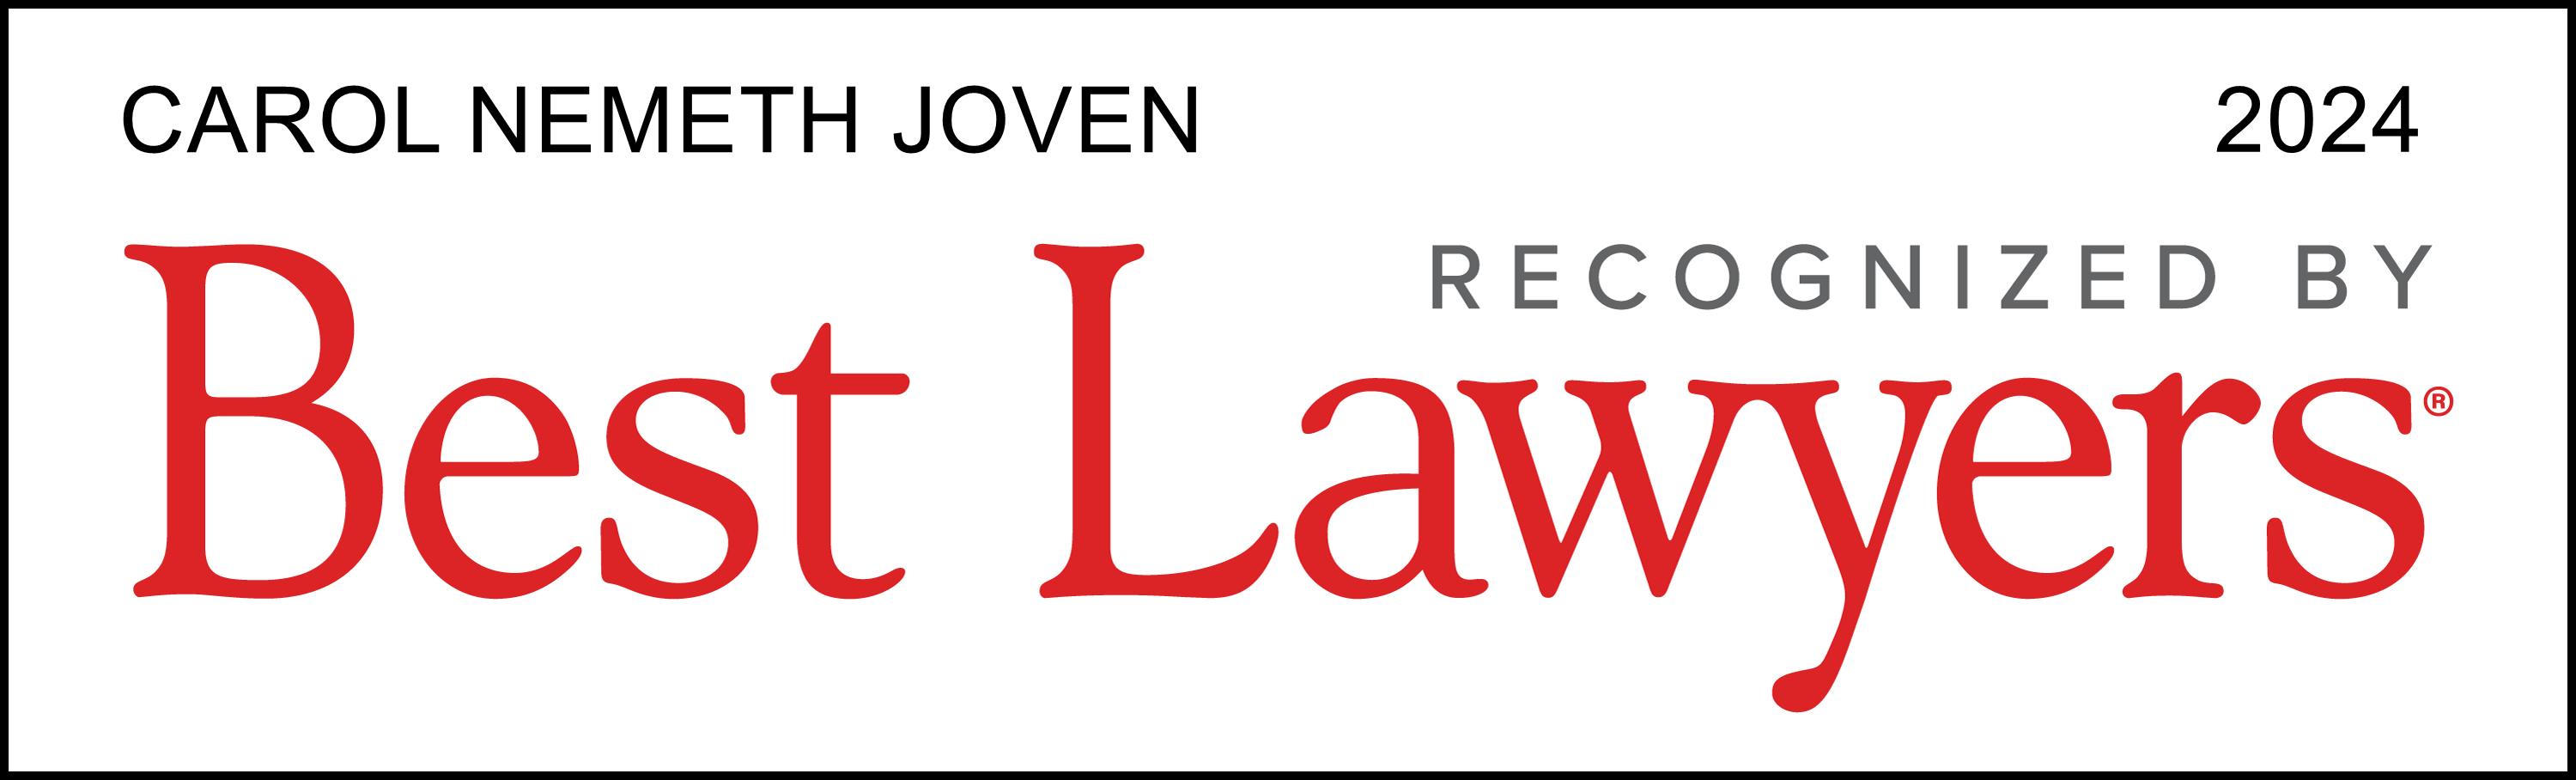 Carol Nemeth Joven Recognized By Best Lawyers